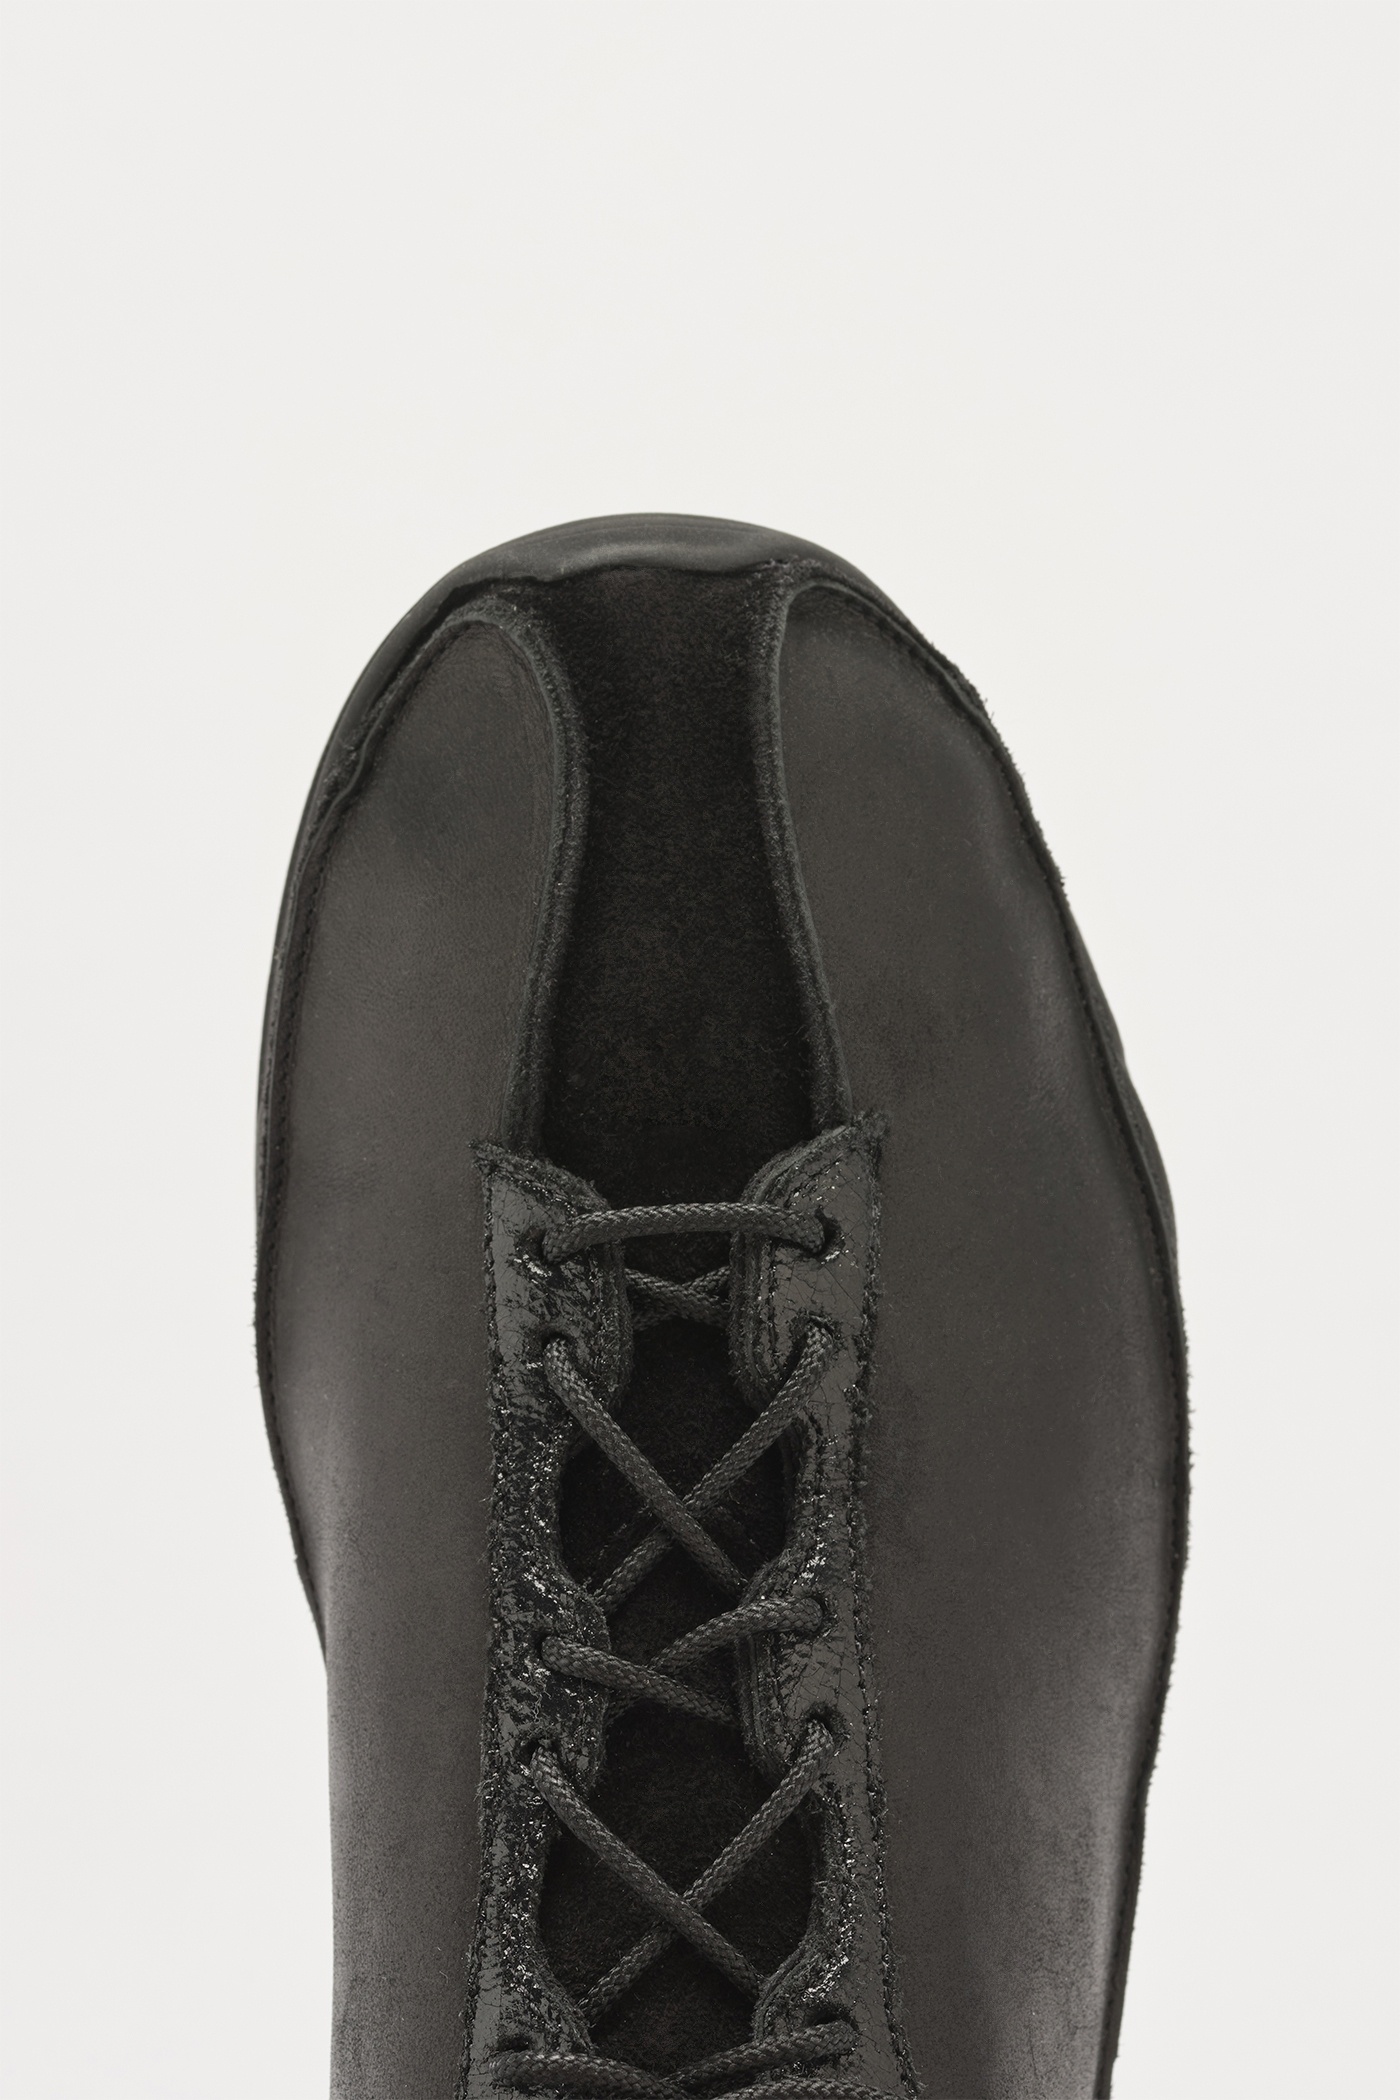 Klove Black Leather - 2